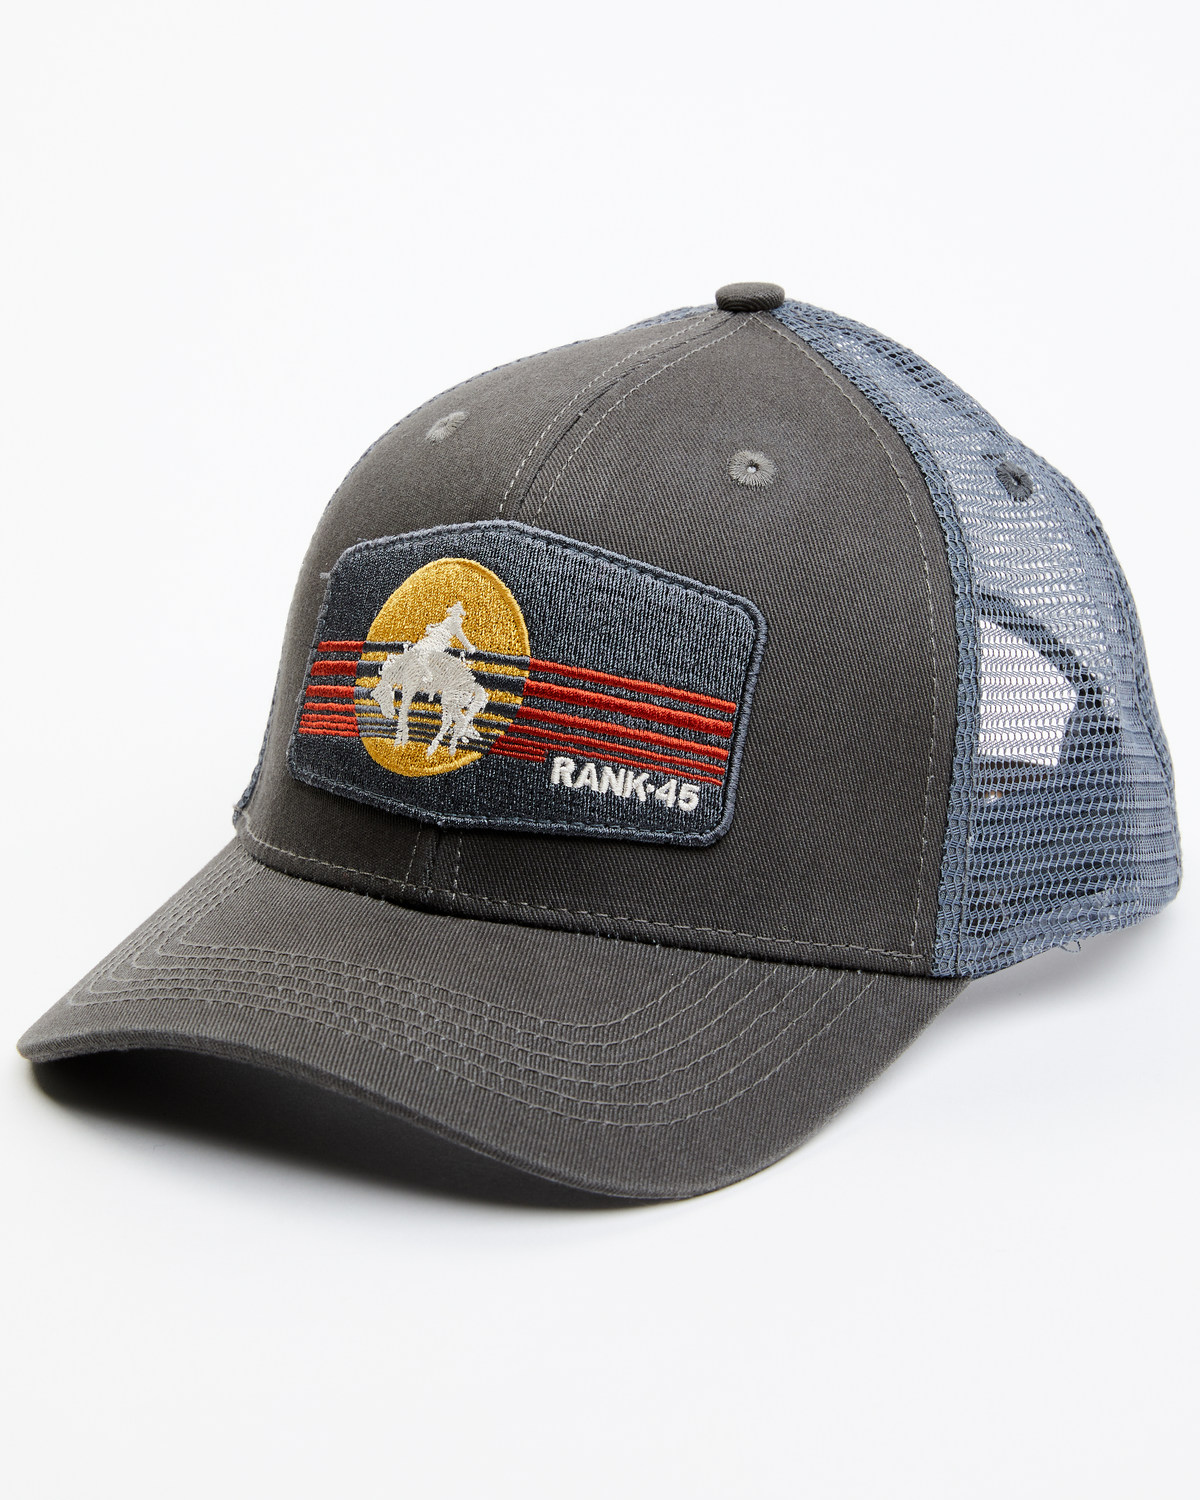 RANK 45® Men's Bronco Rider Embroidered Mesh Back Ball Cap